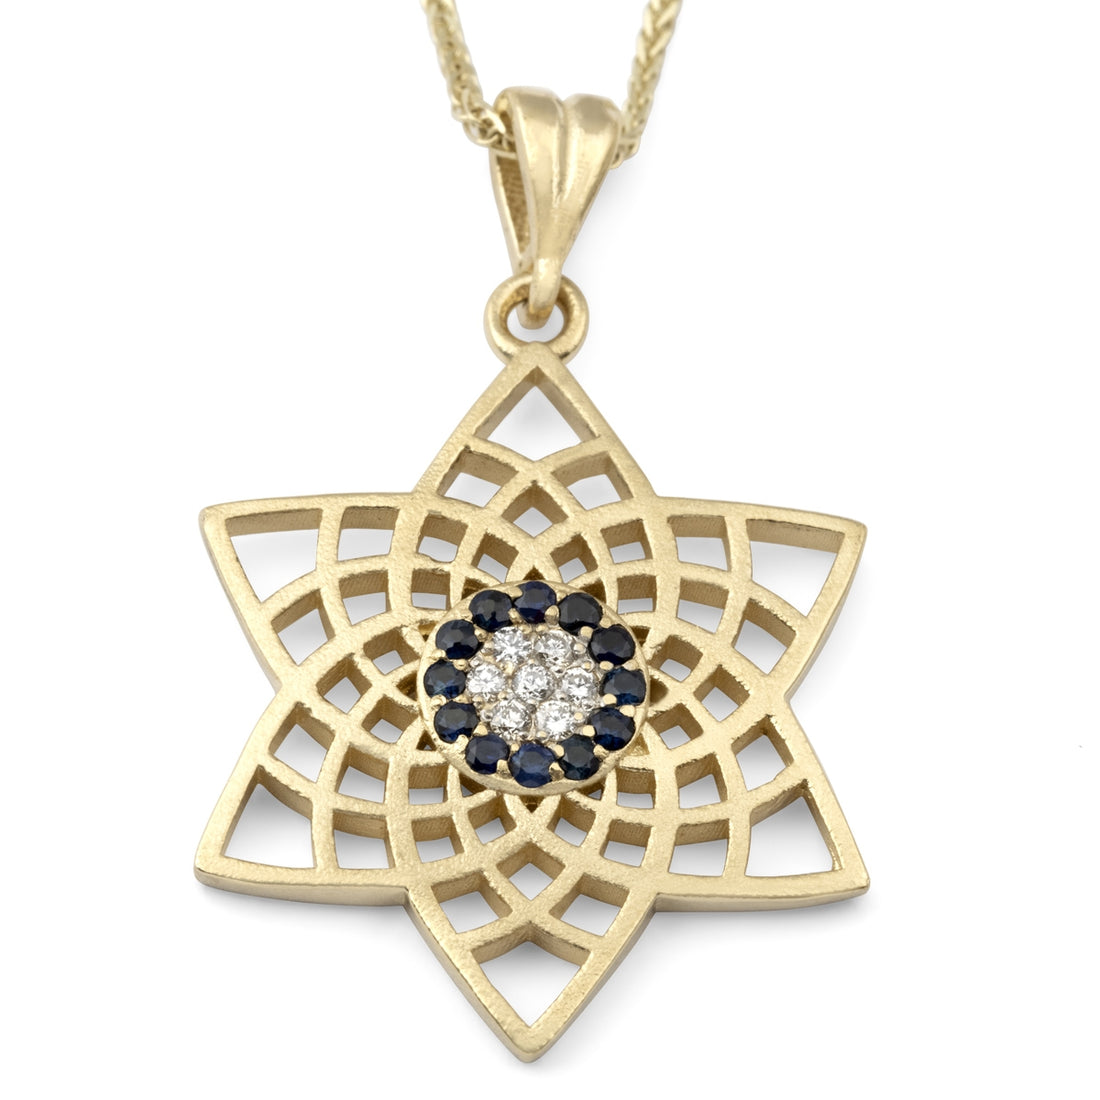 Modern 14K Yellow Gold Star of David Diamond Pendant Necklace With Sapphire Stones